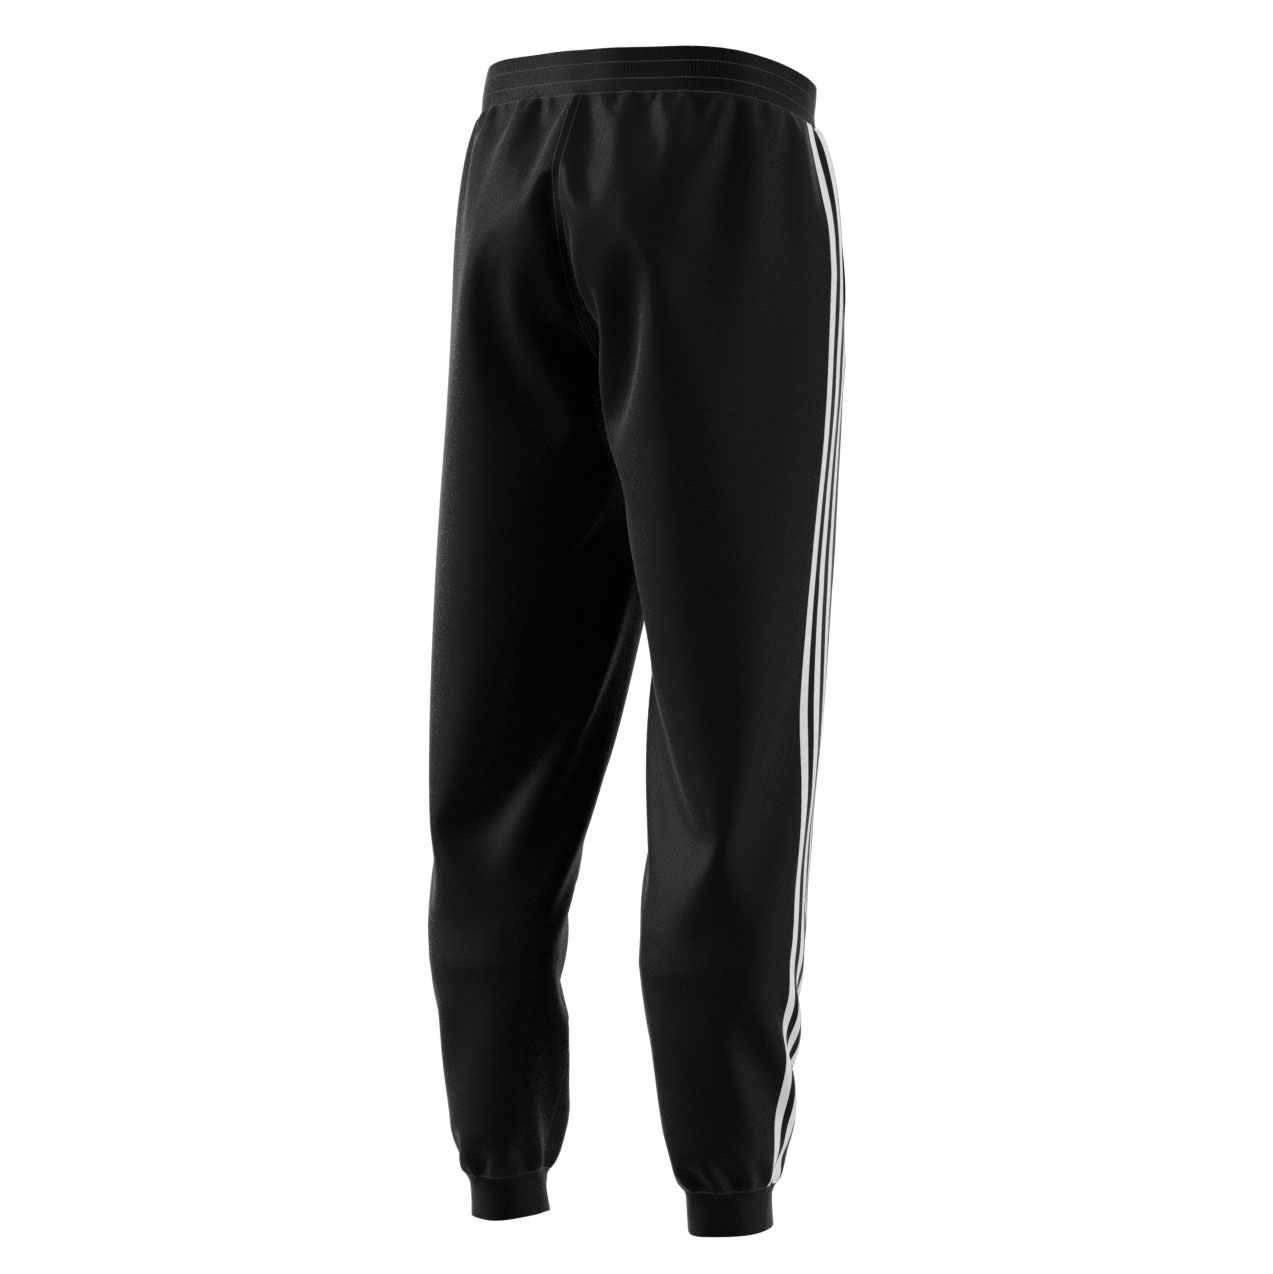 Adidas Originals 3-Stripes Men's Athletic Casual Fashion Joggers Black  dh5801 | eBay